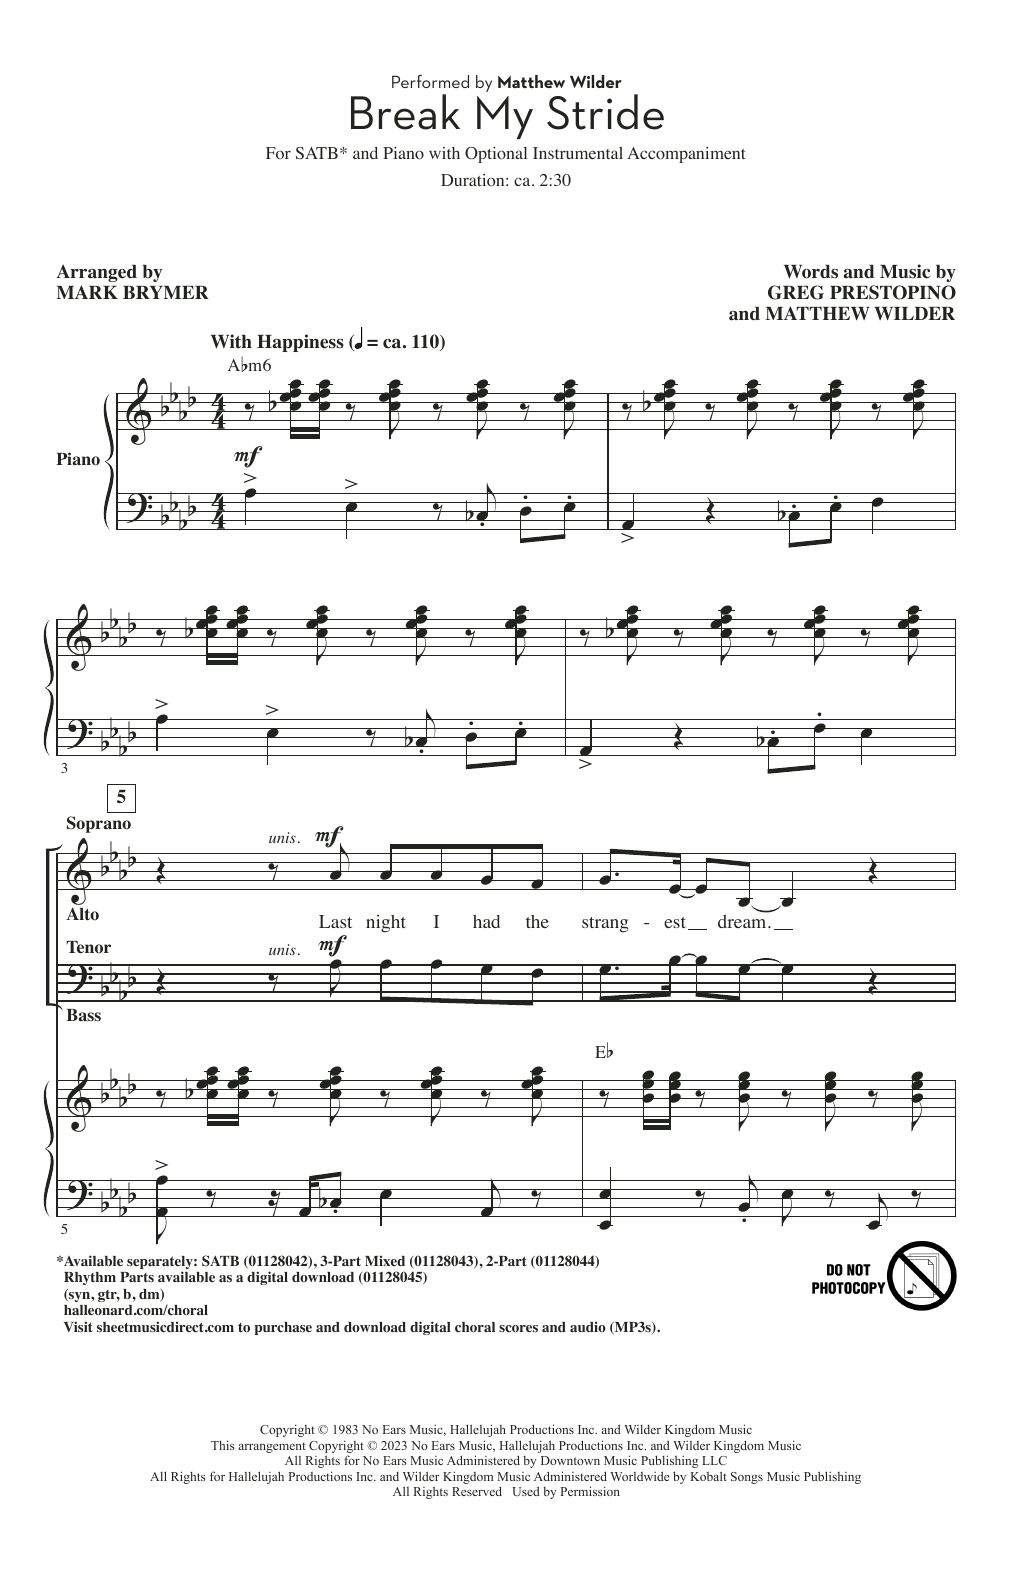 Matthew Wilder Break My Stride (arr. Mark Brymer) Sheet Music Notes & Chords for 3-Part Mixed Choir - Download or Print PDF